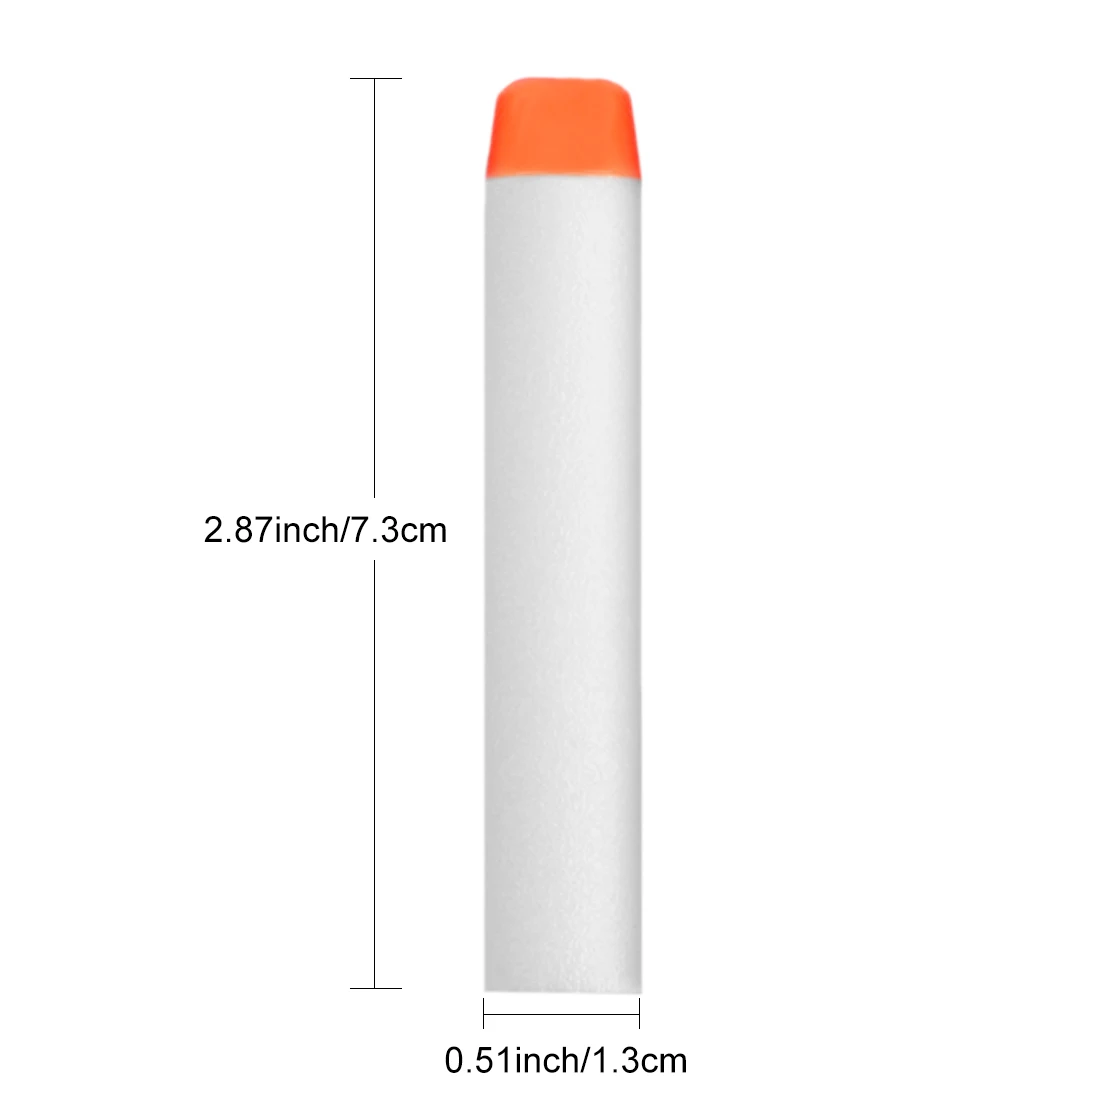 100pcs/200pcs/500pcs/1000pcs Fluorescence Dart Refills Universal Standard Round Head Hollow Foam Bullets for Nerf Toy Gun